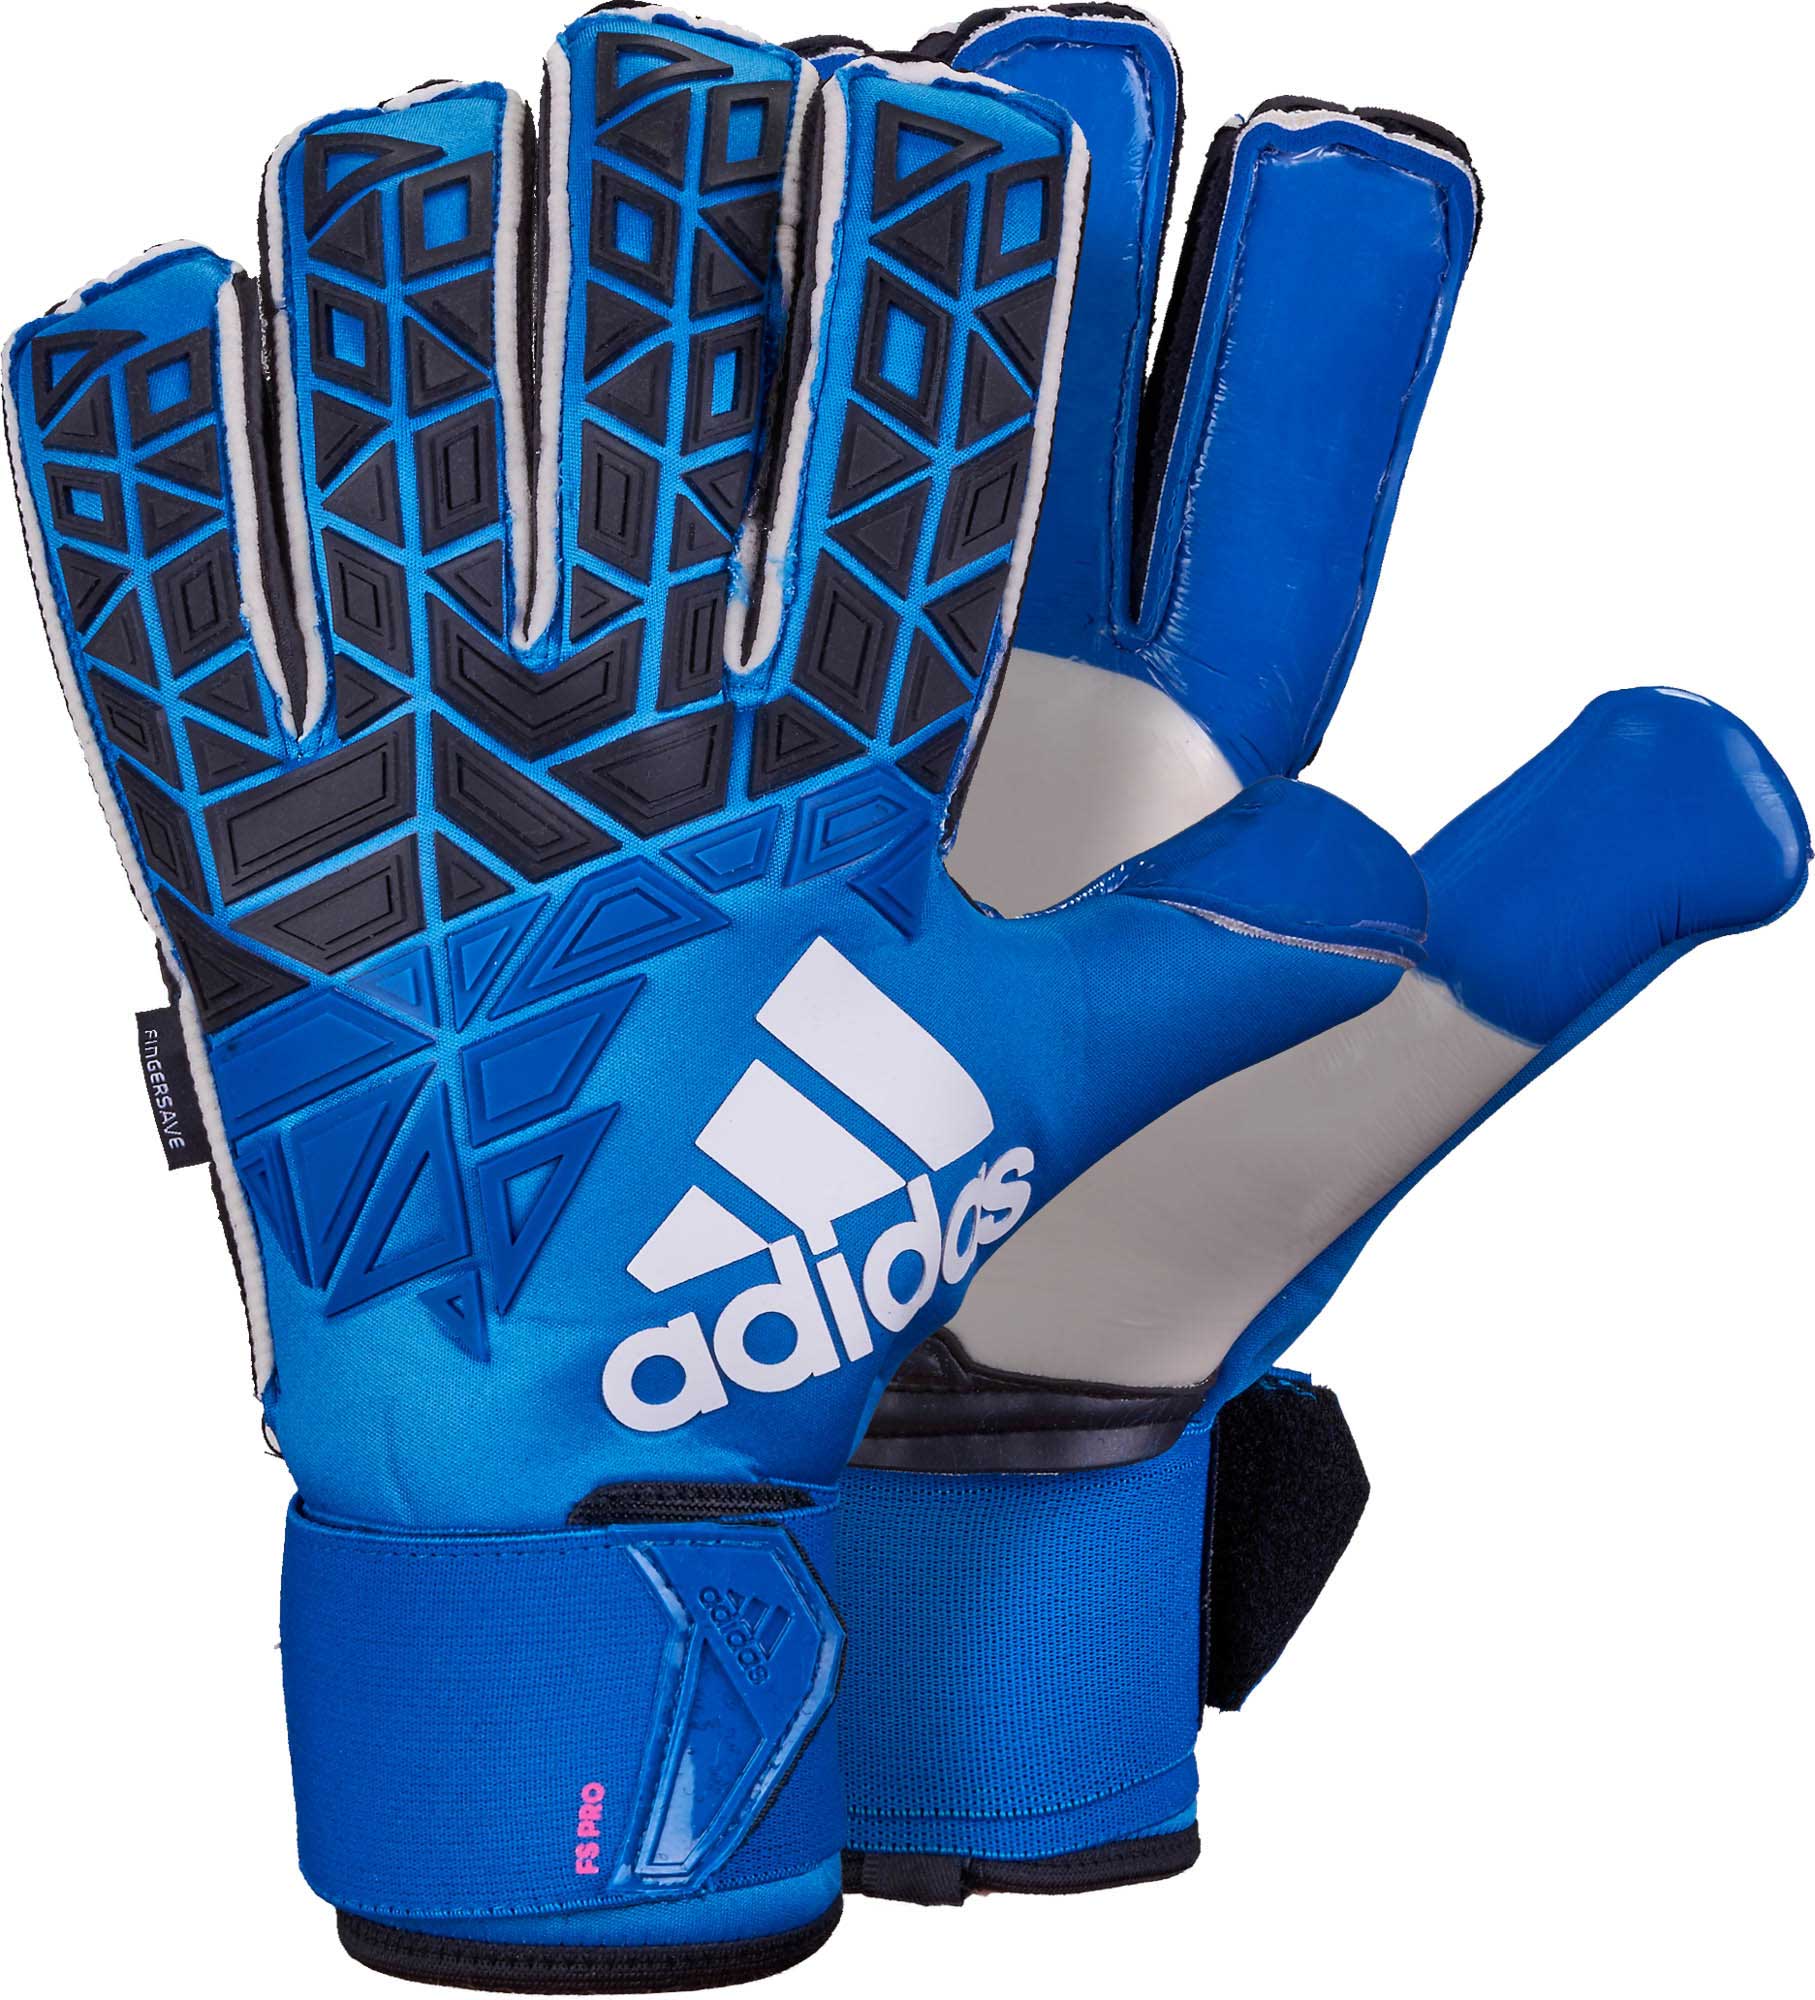 puma goalkeeper gloves pink and blue